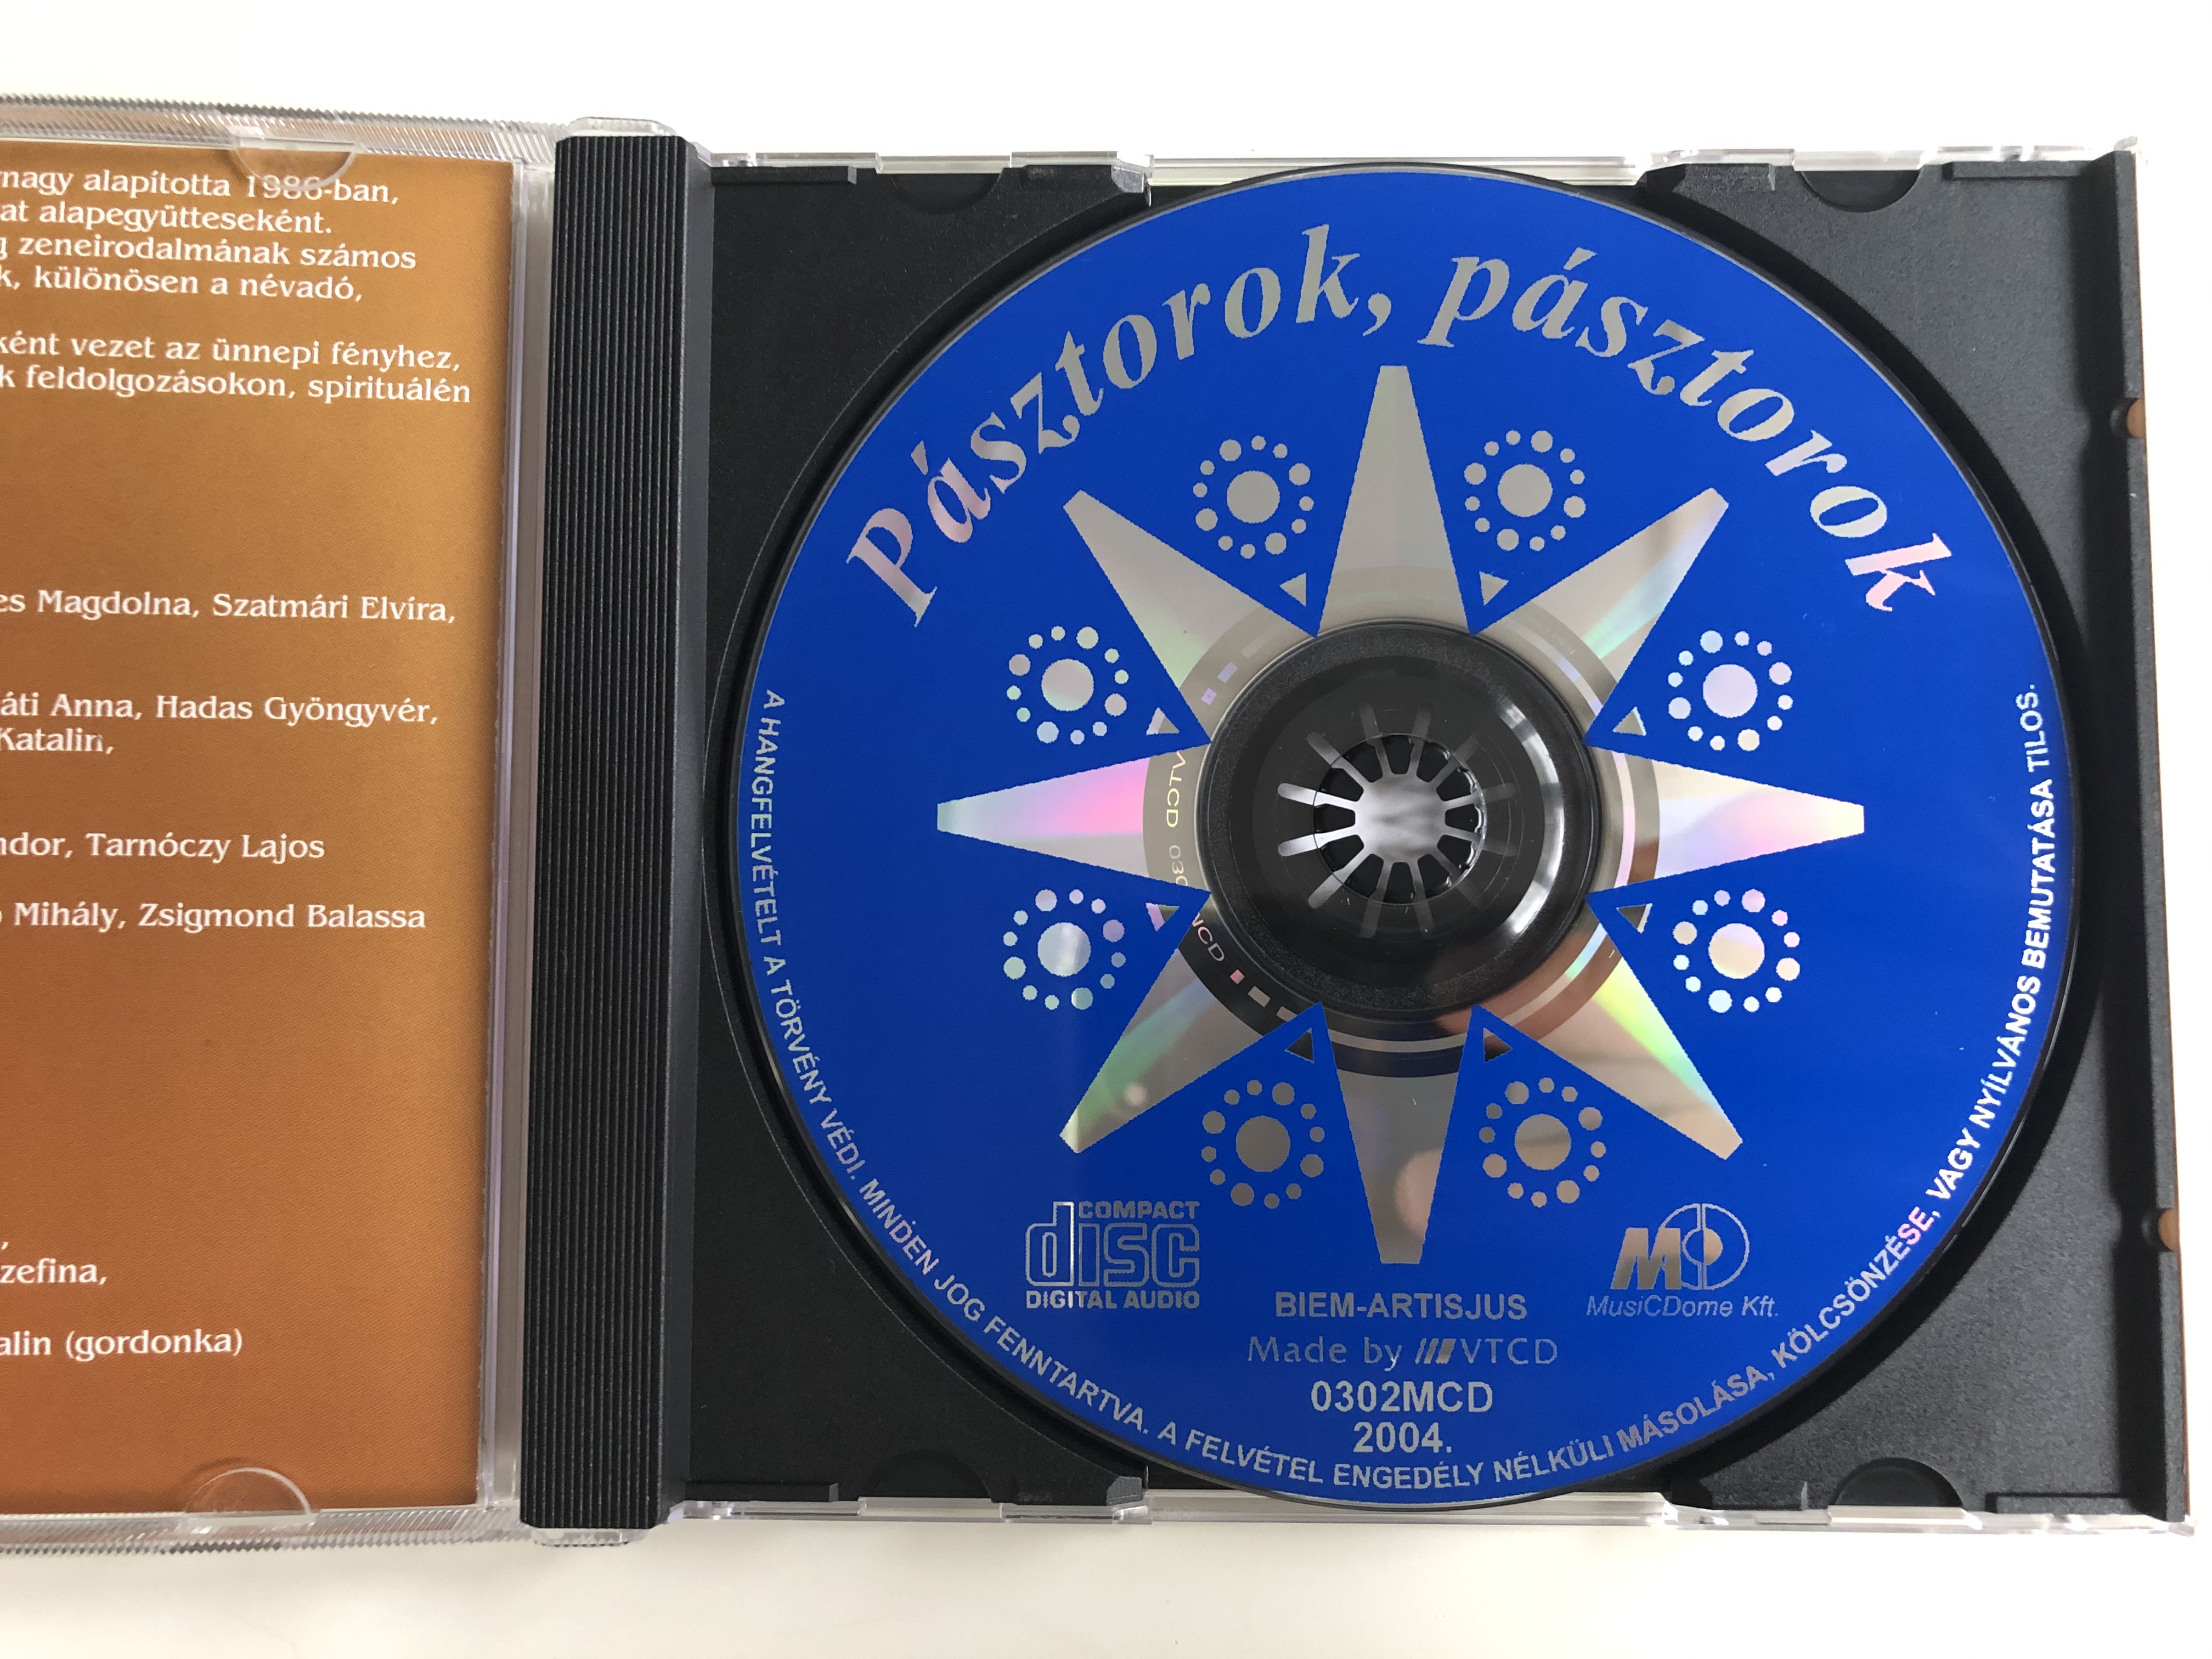 pasztorok-pasztorok-...es-mas-karacsonyi-dalok-musicdome-audio-cd-2004-0302mcd-3-.jpg